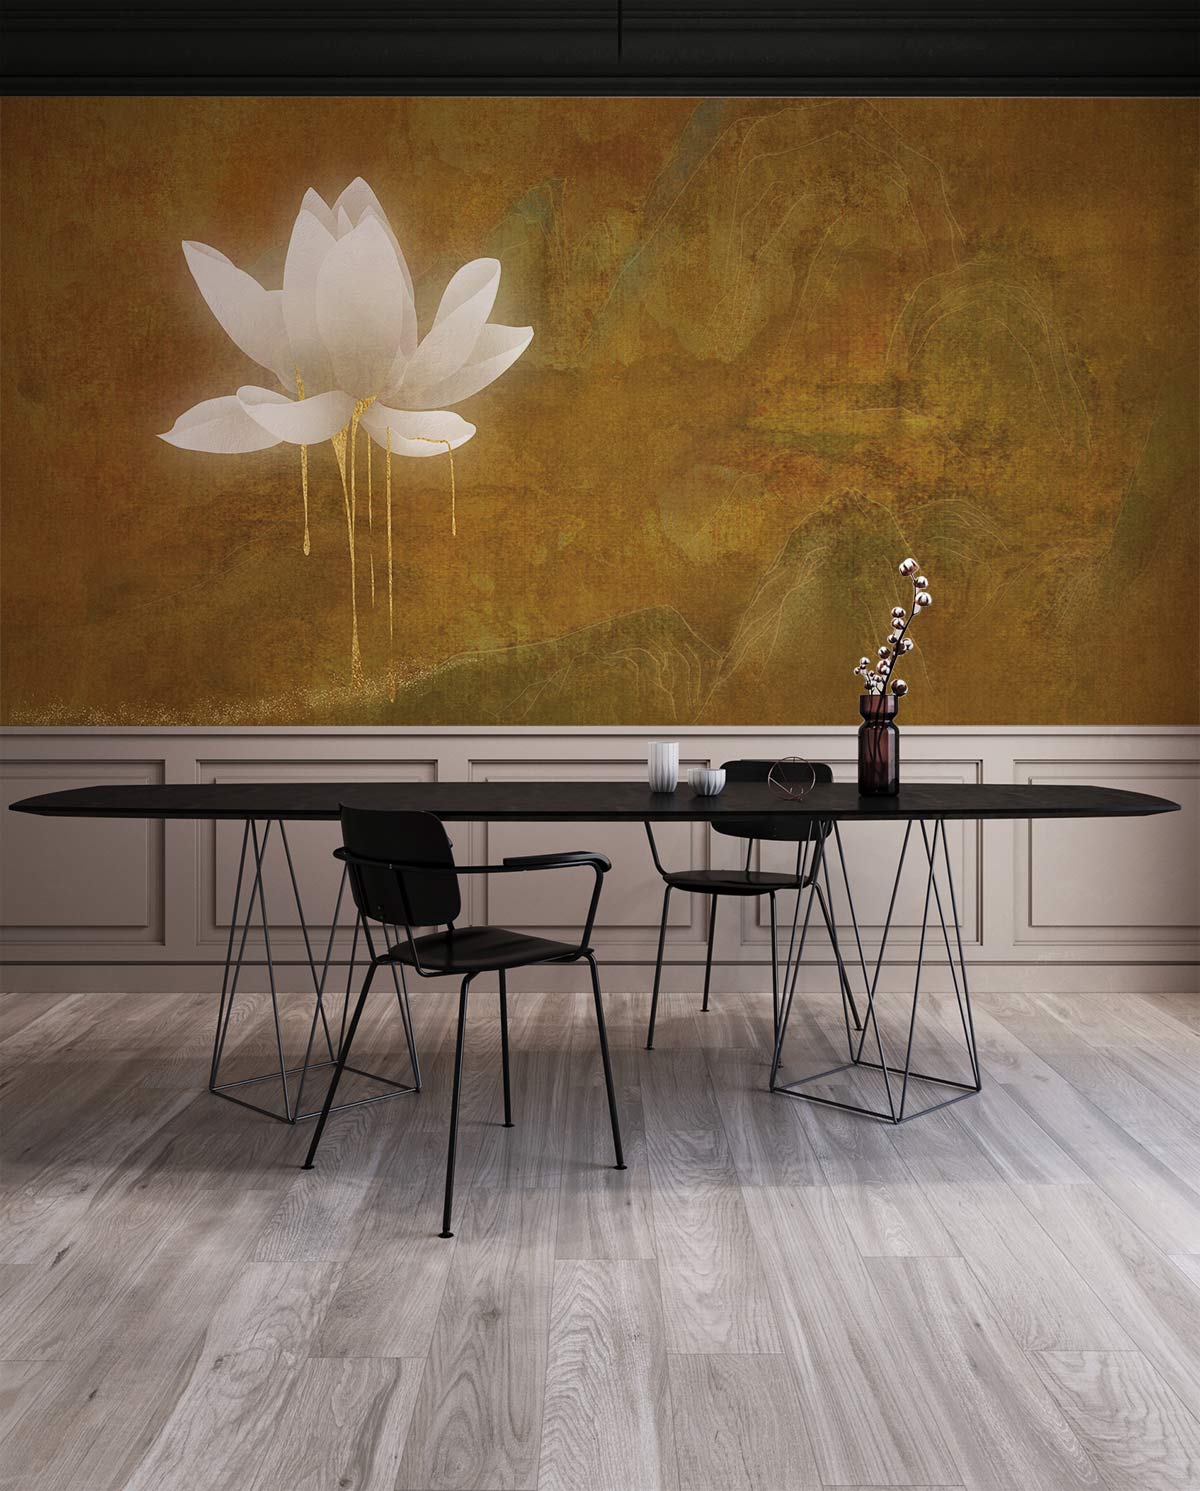 Gold Plated Lotus Flower Wallpaper Home Decor Design